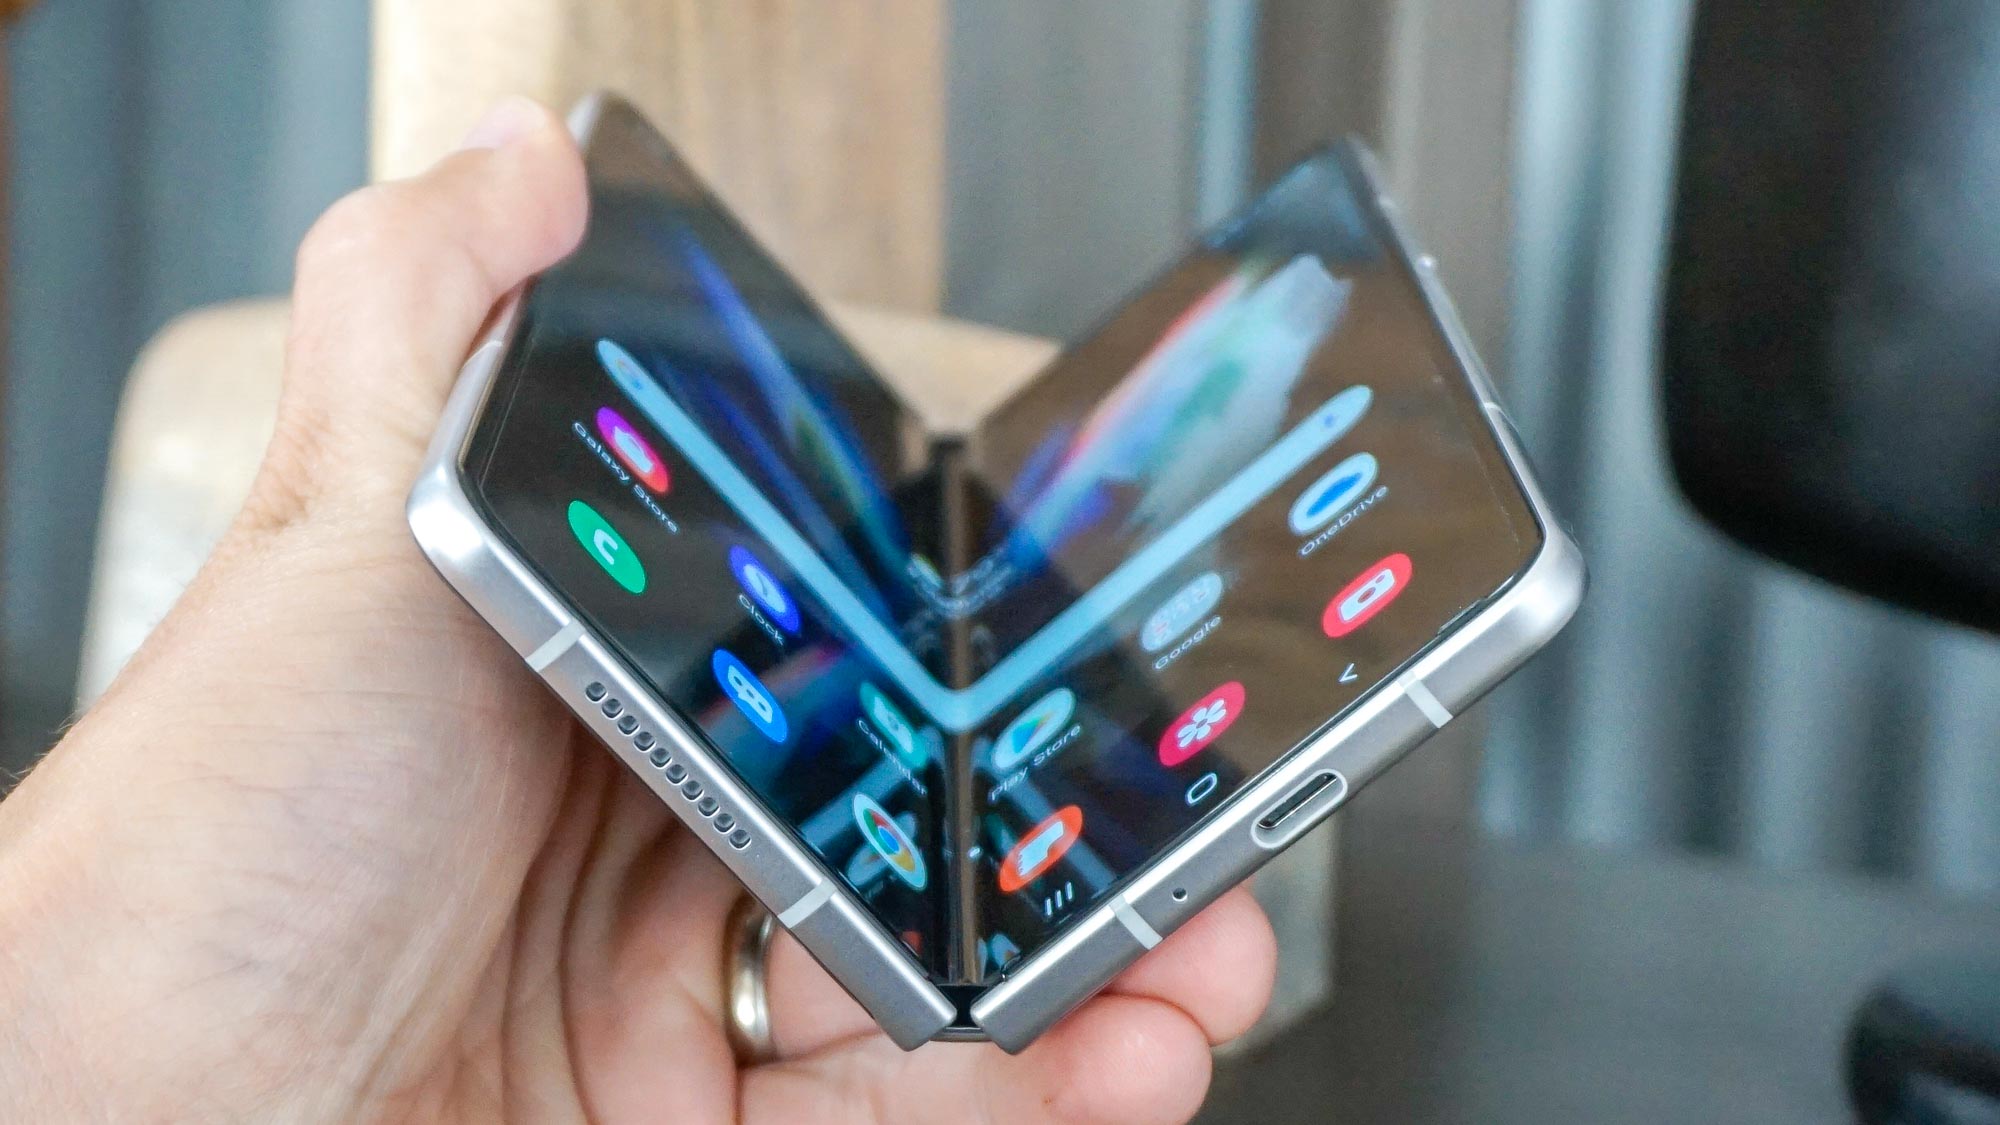 Samsung z fold 3